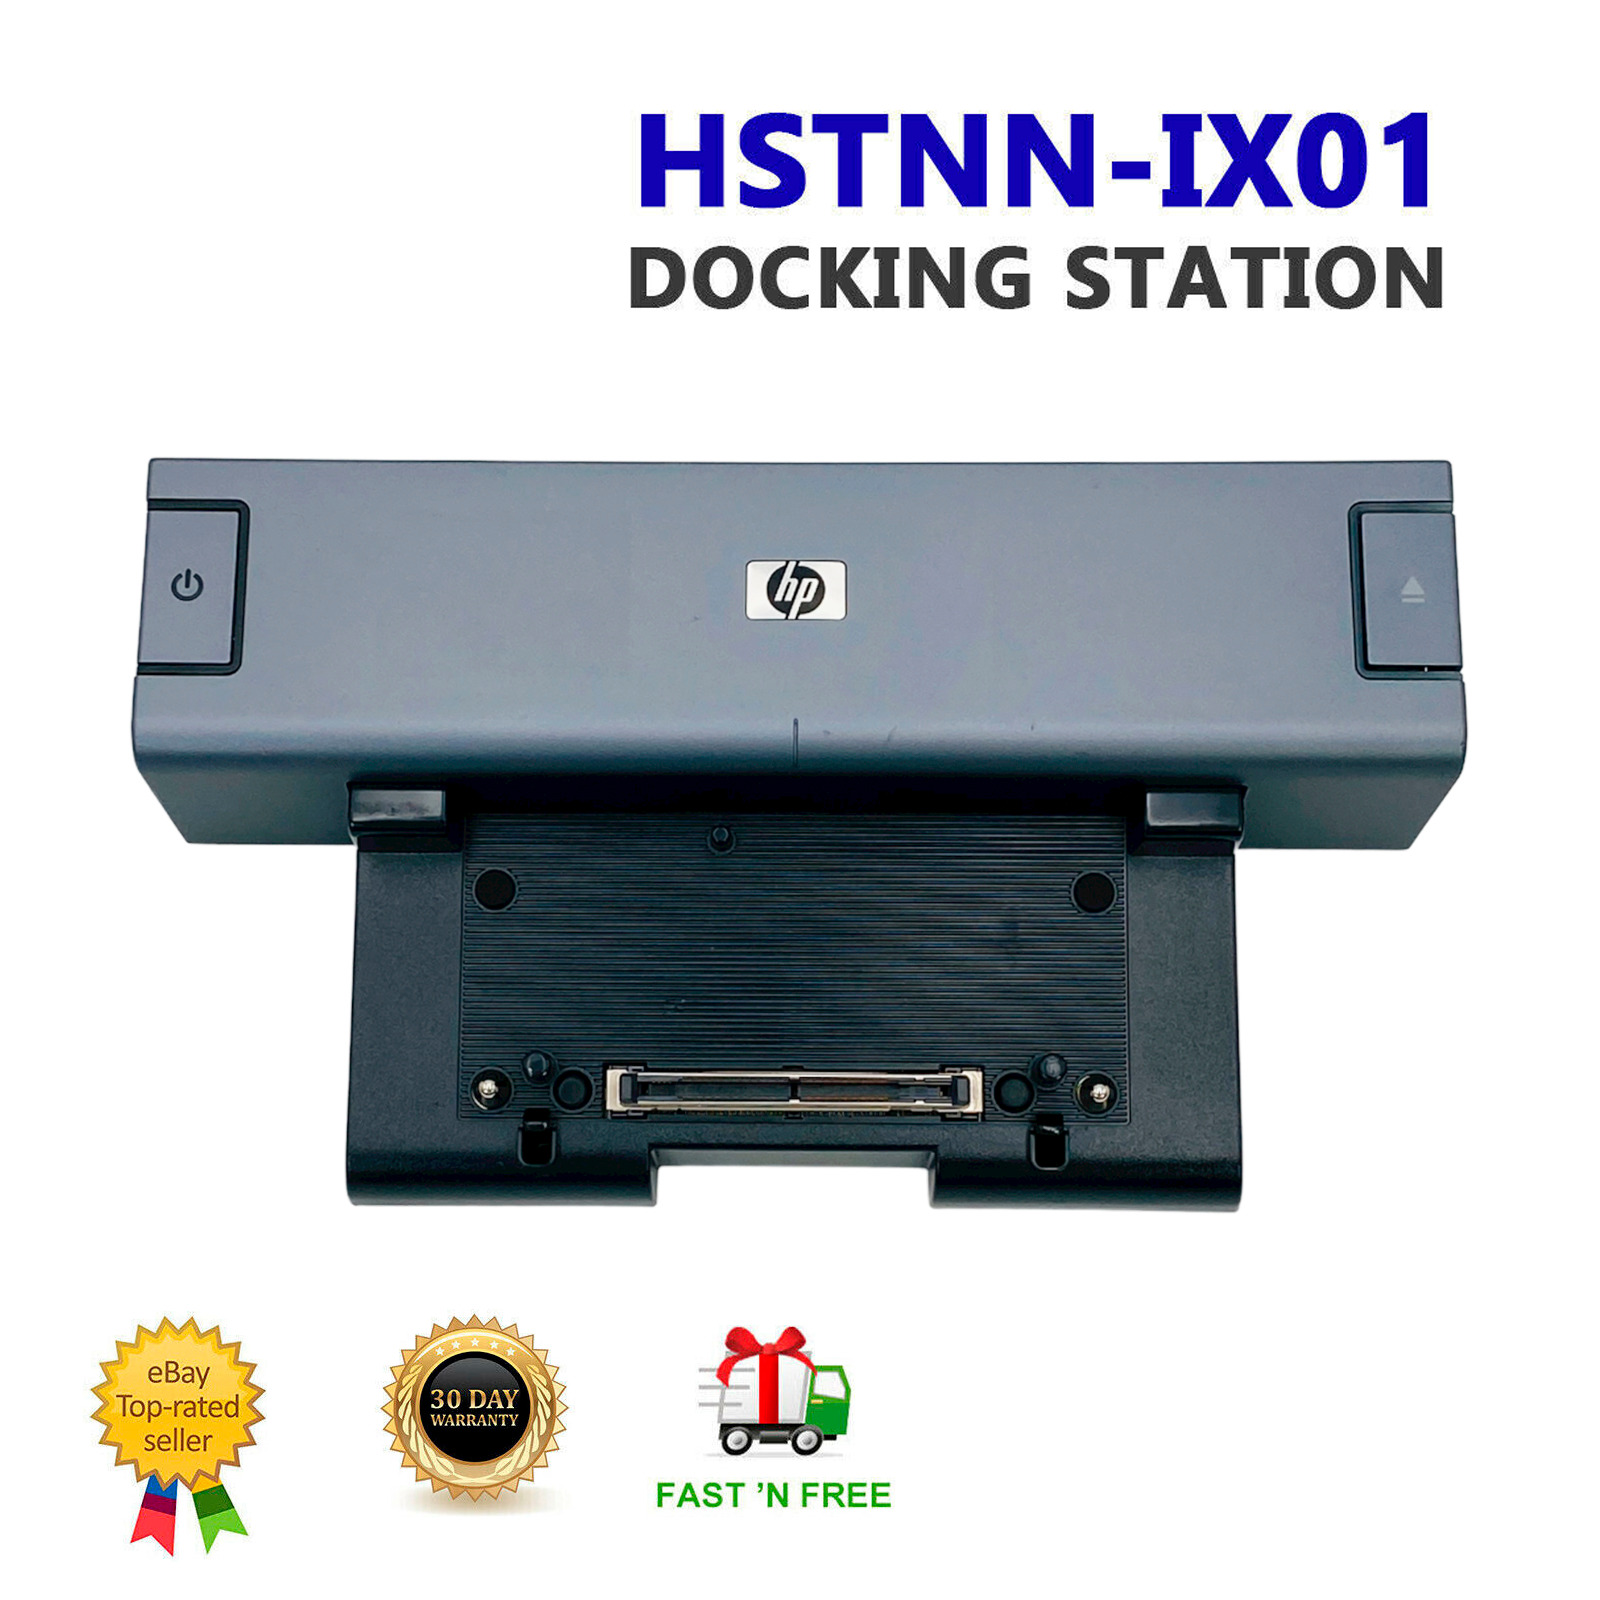 HP Docking Station for Compaq Nc6120 Nc6220 Nc6230 Nc6320 Nc6400 Laptop